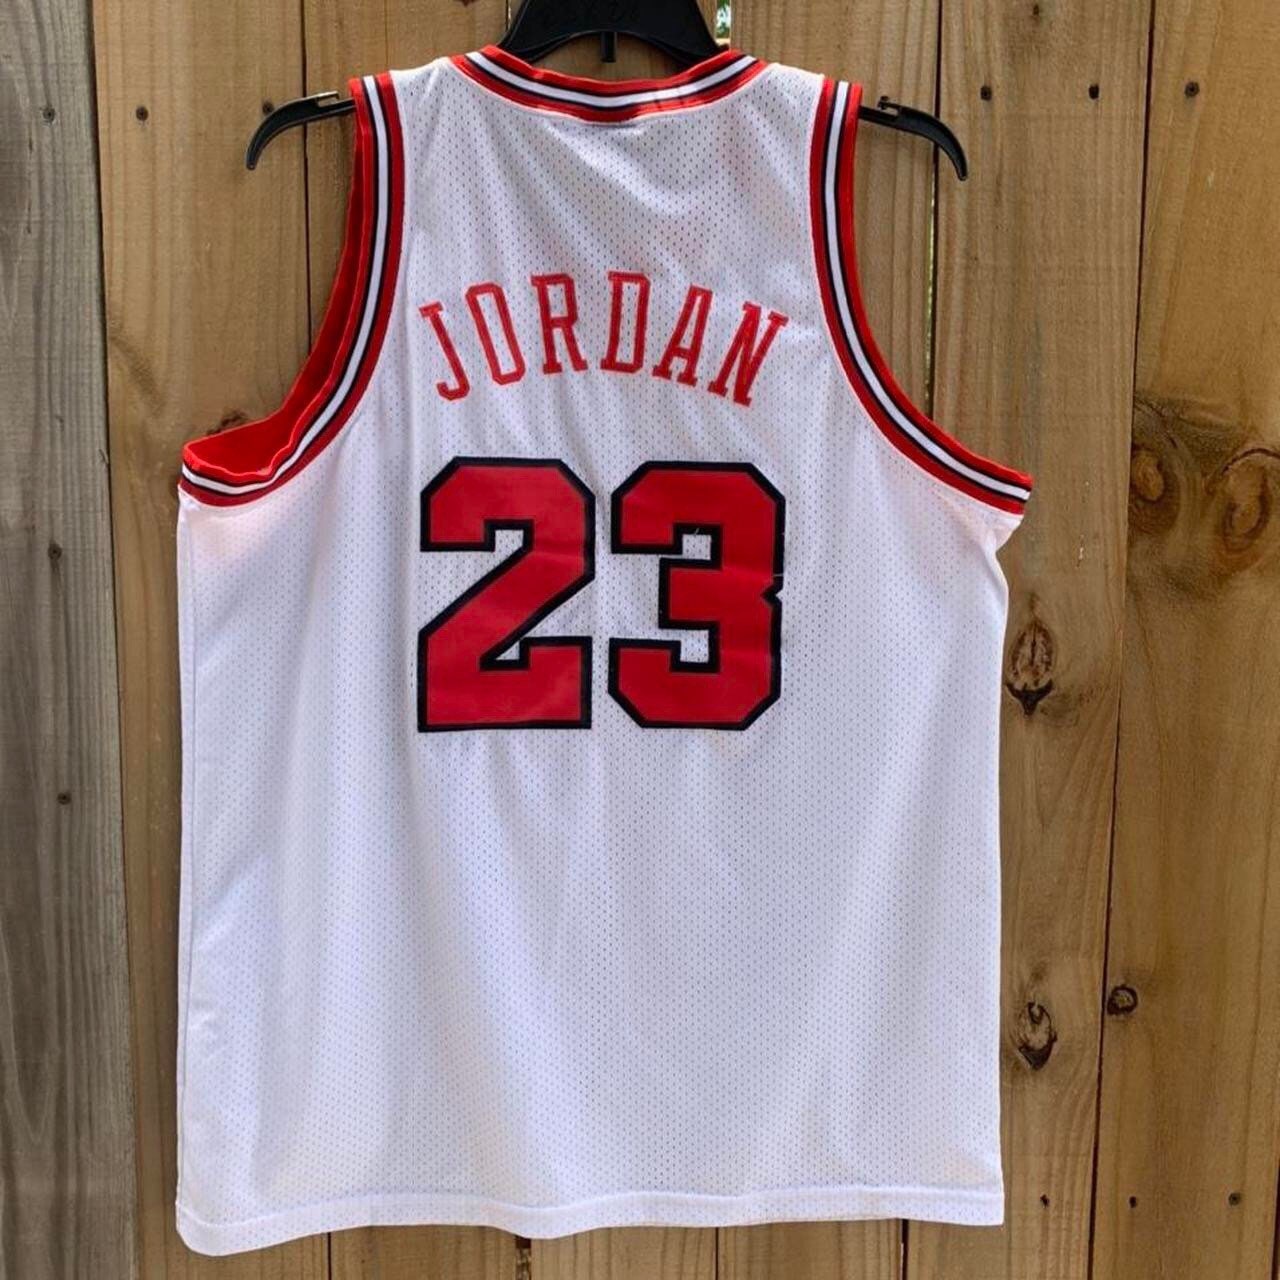 Nike Michael Jordan jersey NBA Chicago Bulls 1984 flight 8403